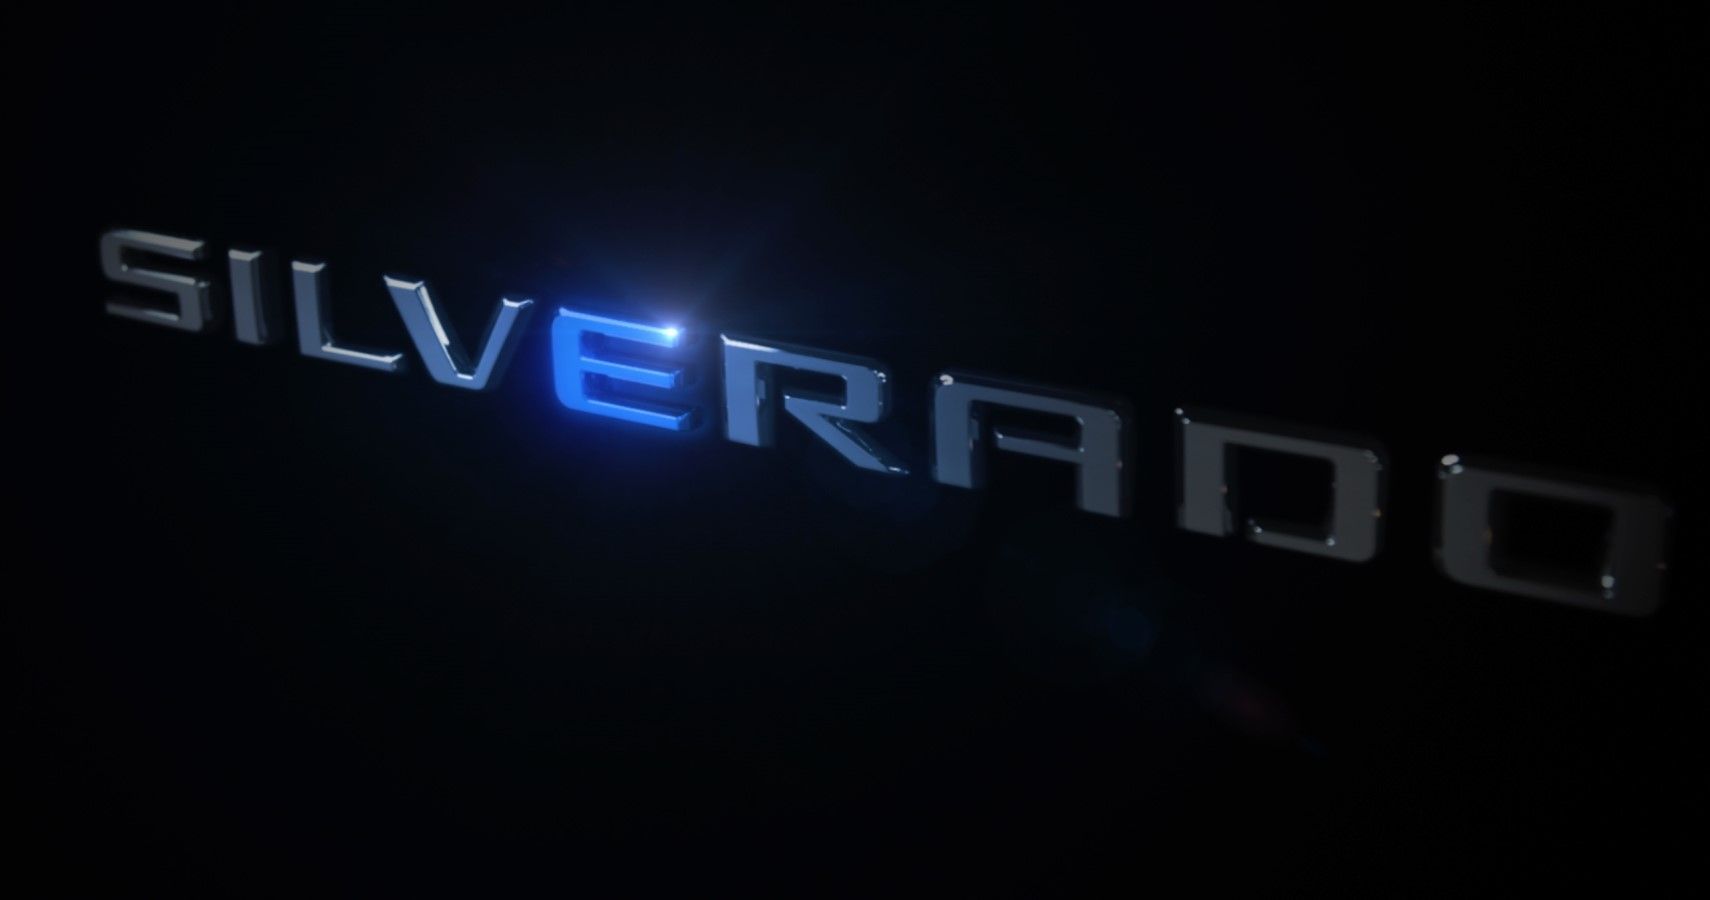 The new Chevy Silverado EV badging will be electrifying